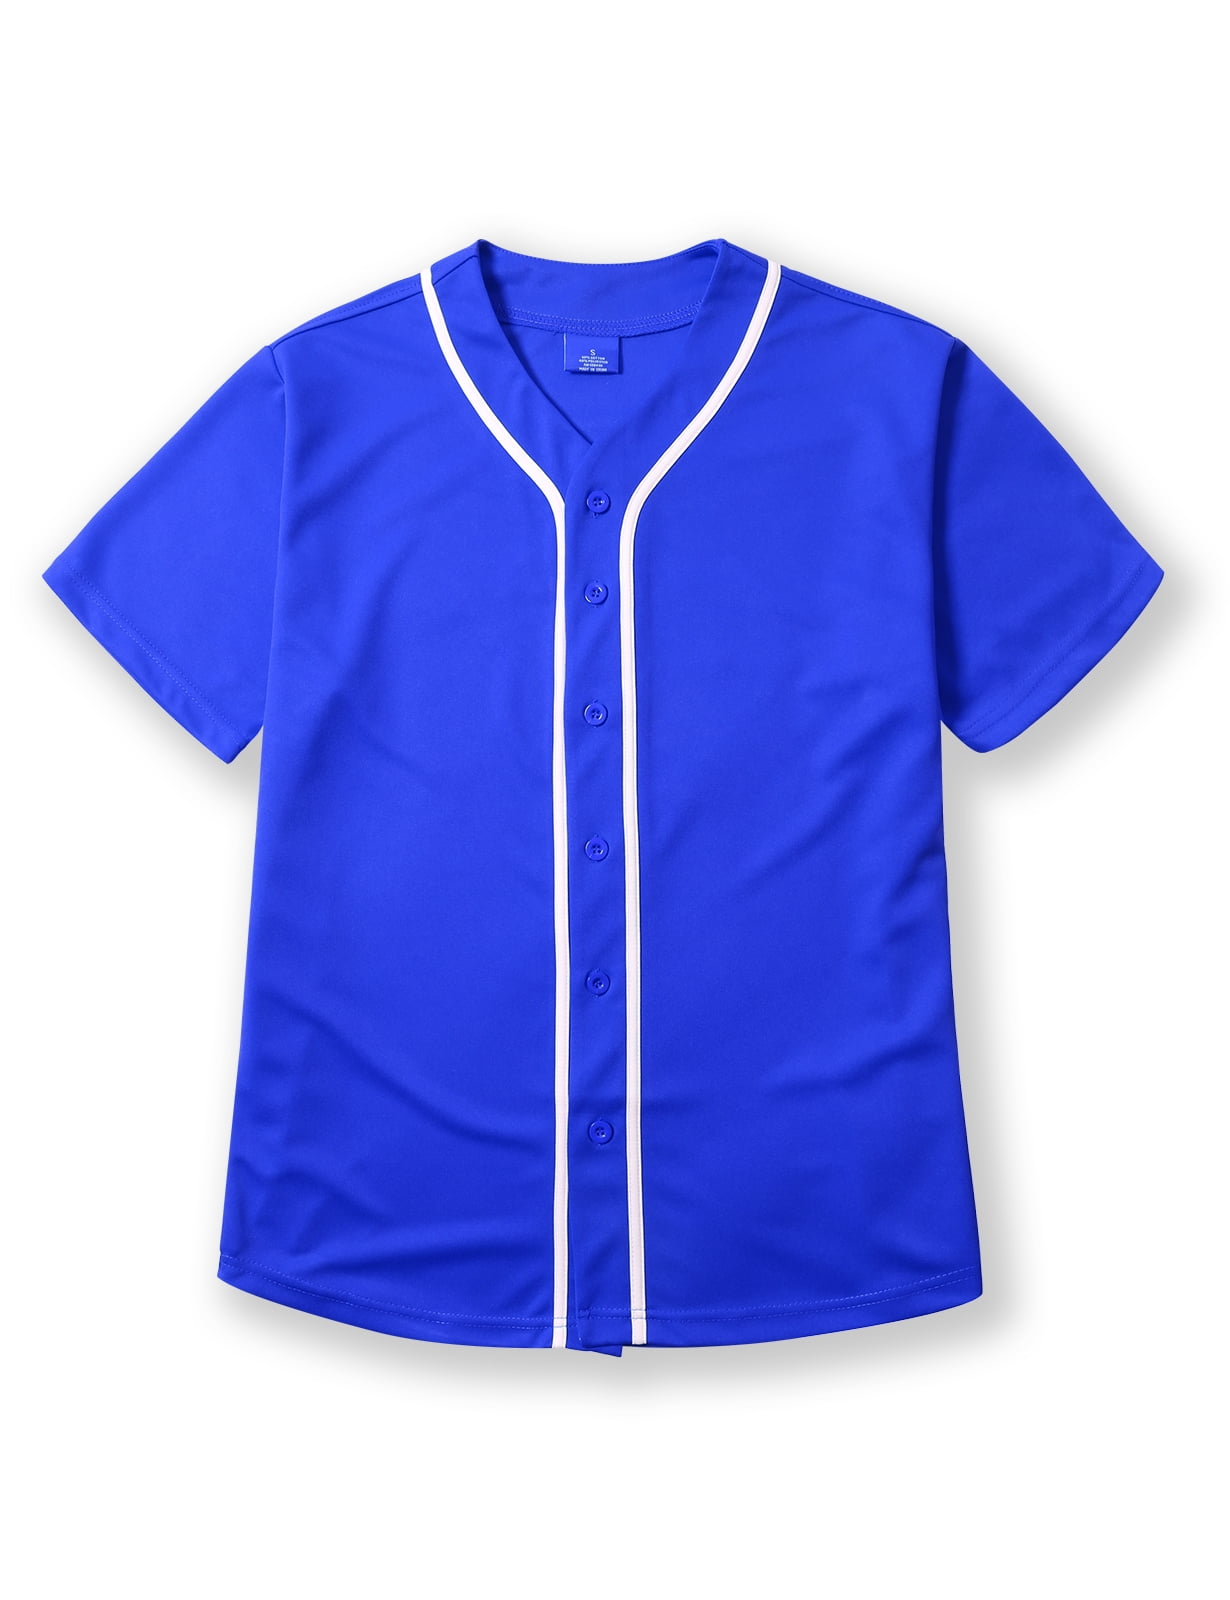 basic baseball jersey